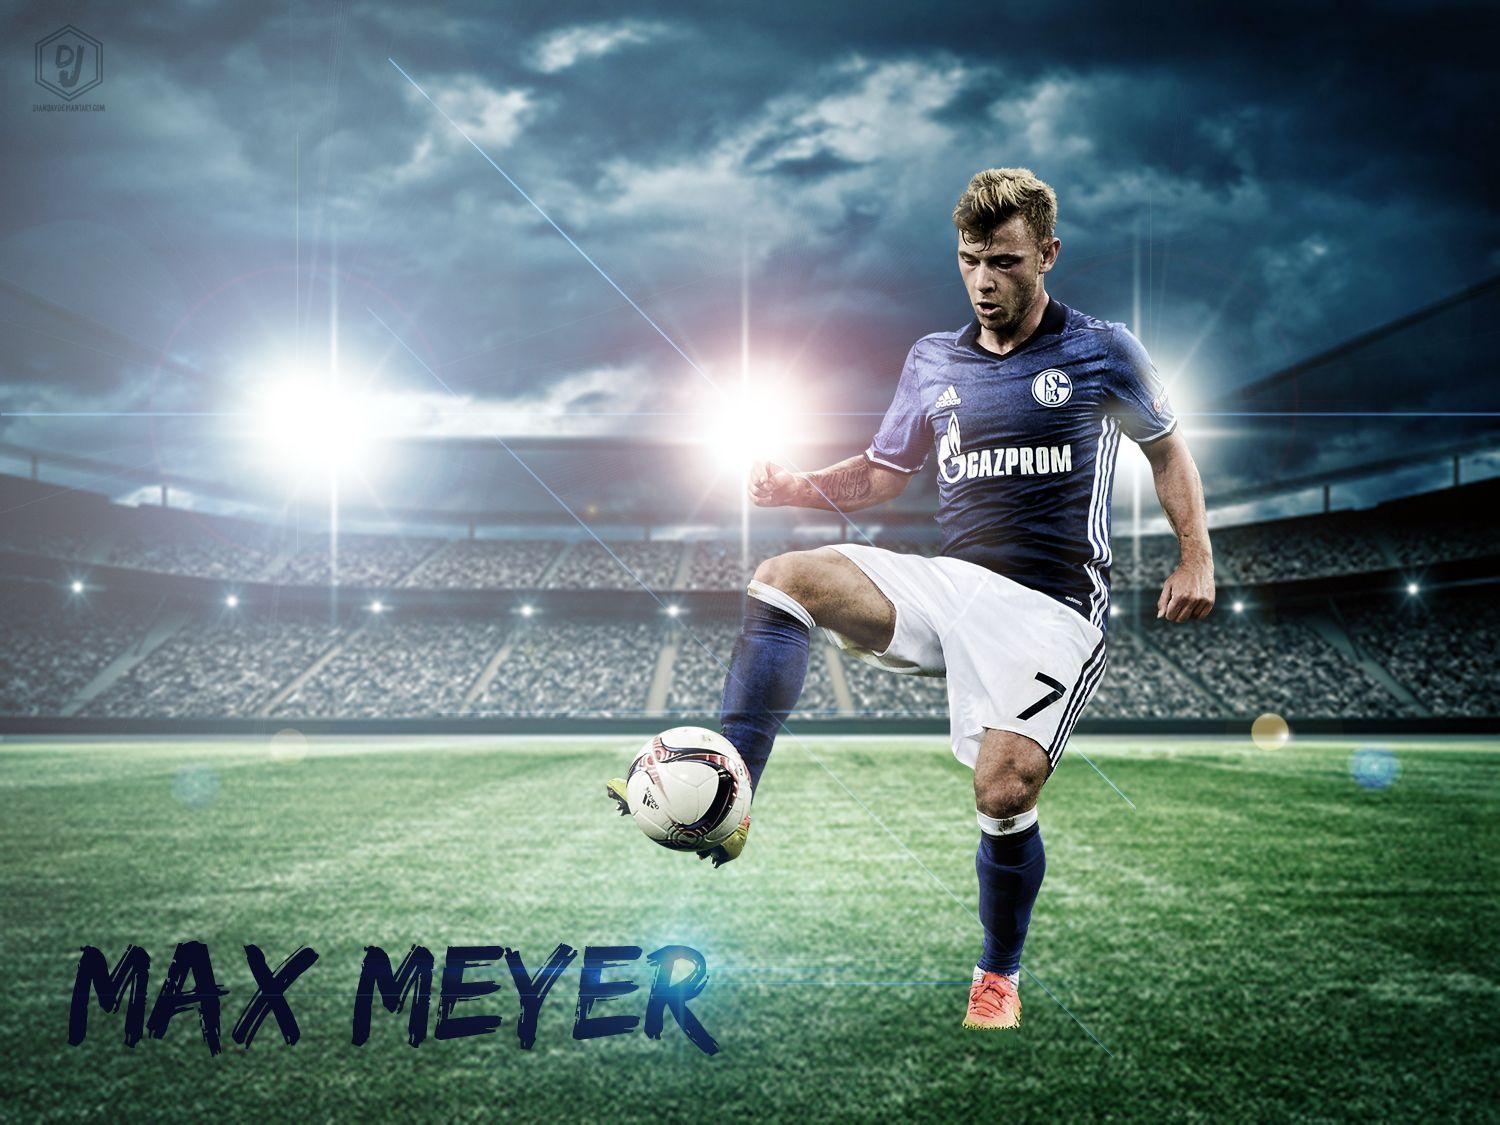 Max Meyer Schalke 04 2016 17 Wallpaper